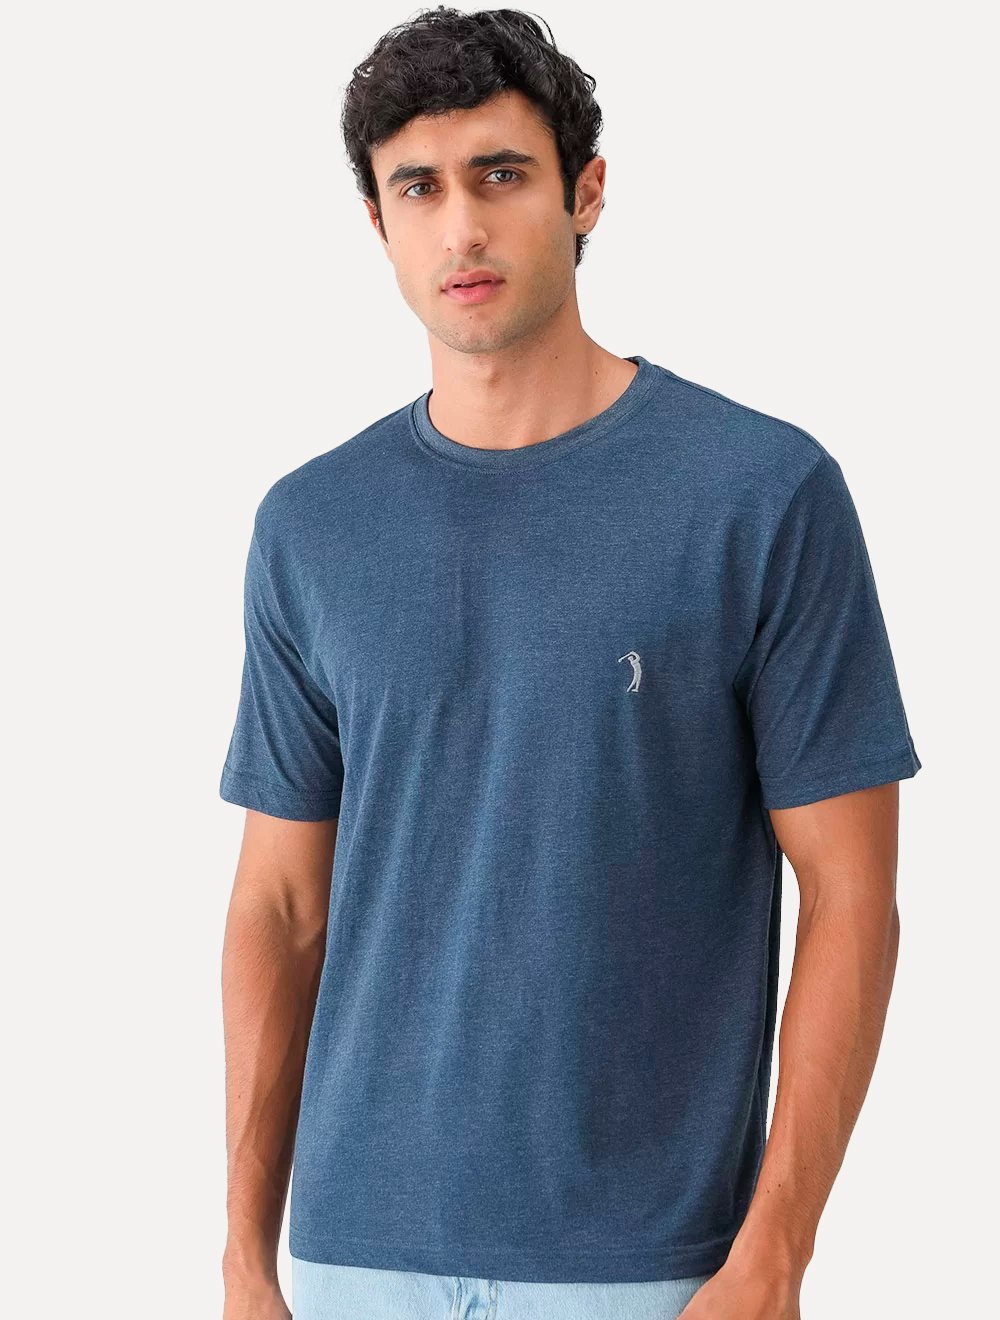 Camiseta Aleatory Masculina Grey Icon Azul Marinho Mescla